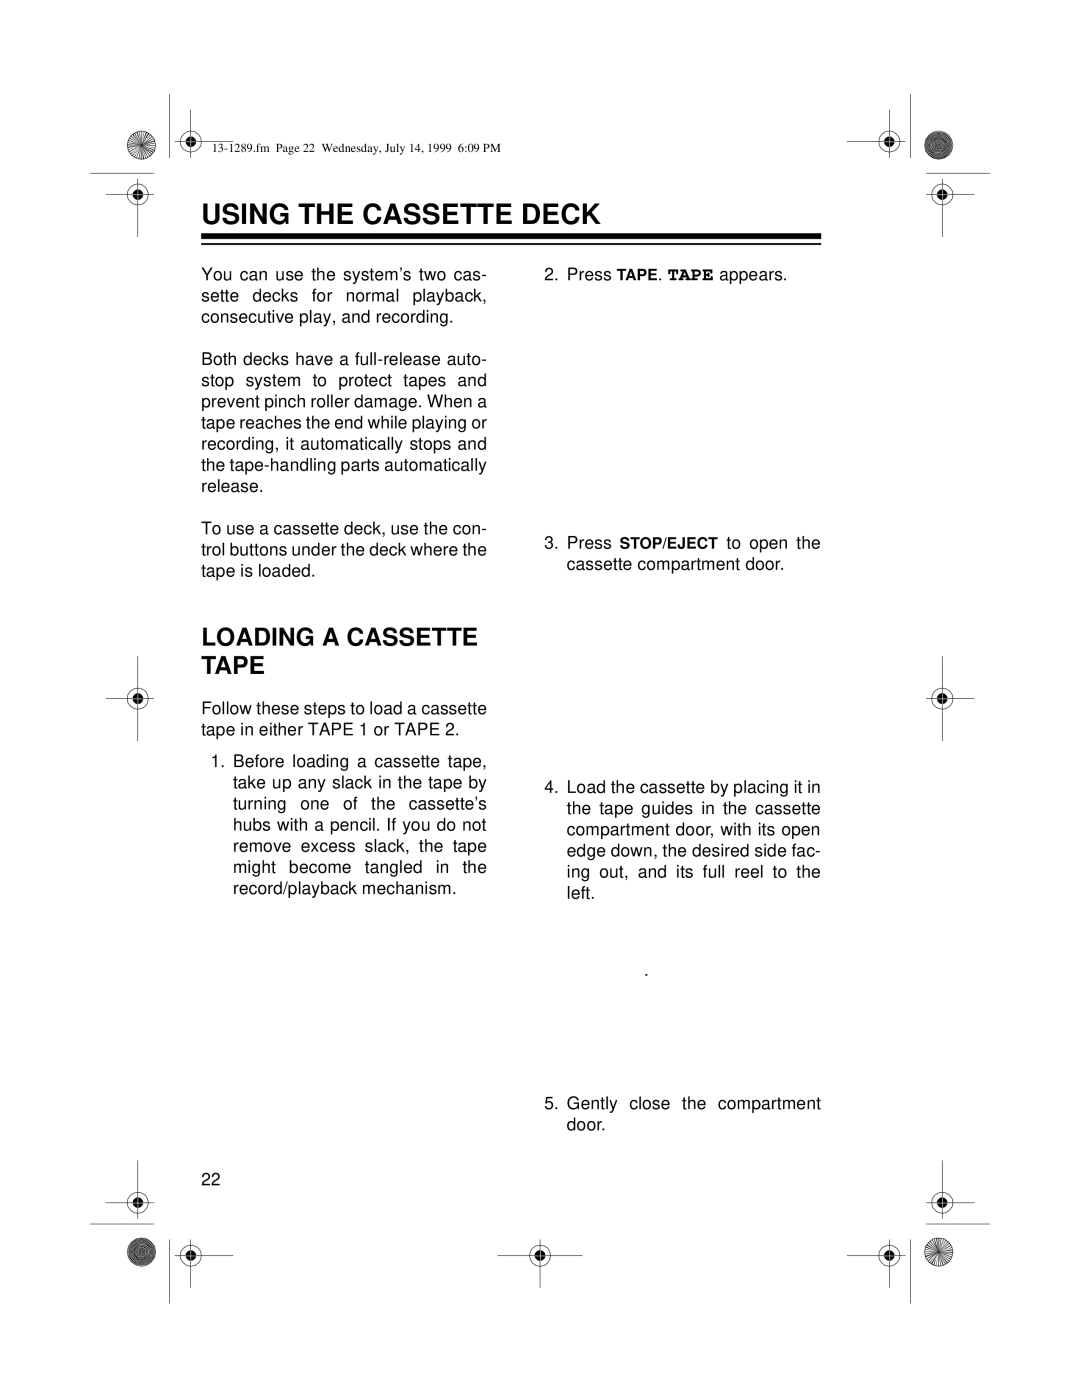 Optimus 742 owner manual Using The Cassette Deck, Loading A Cassette Tape 